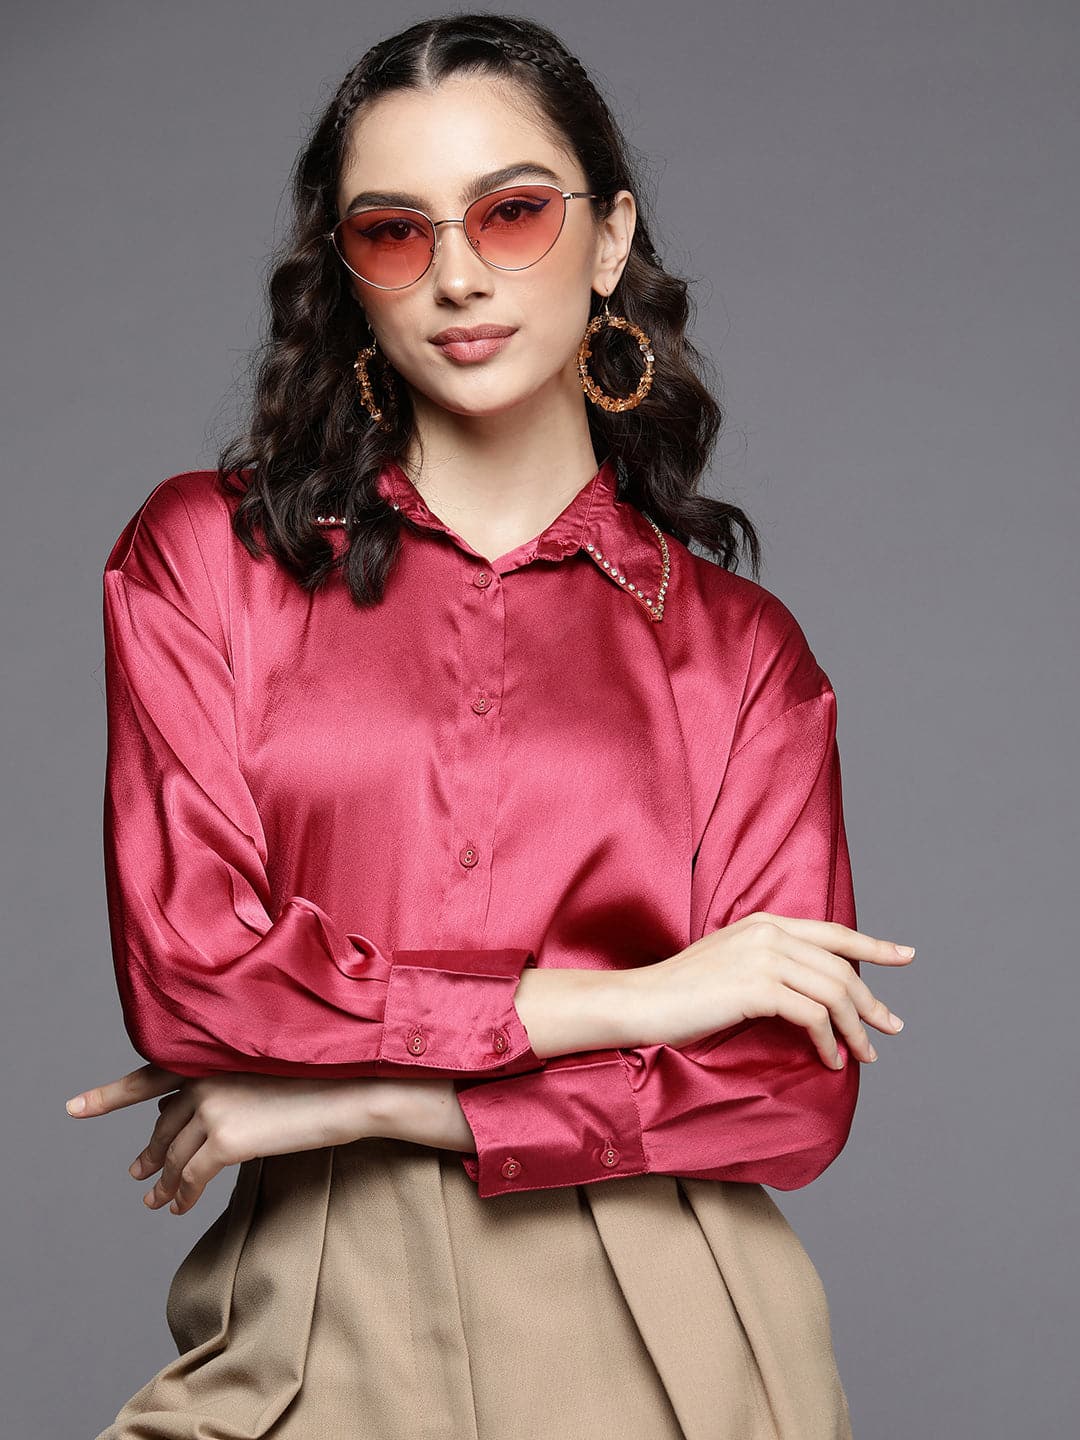 Women's Pink Satin Longline Shirt - Lyush